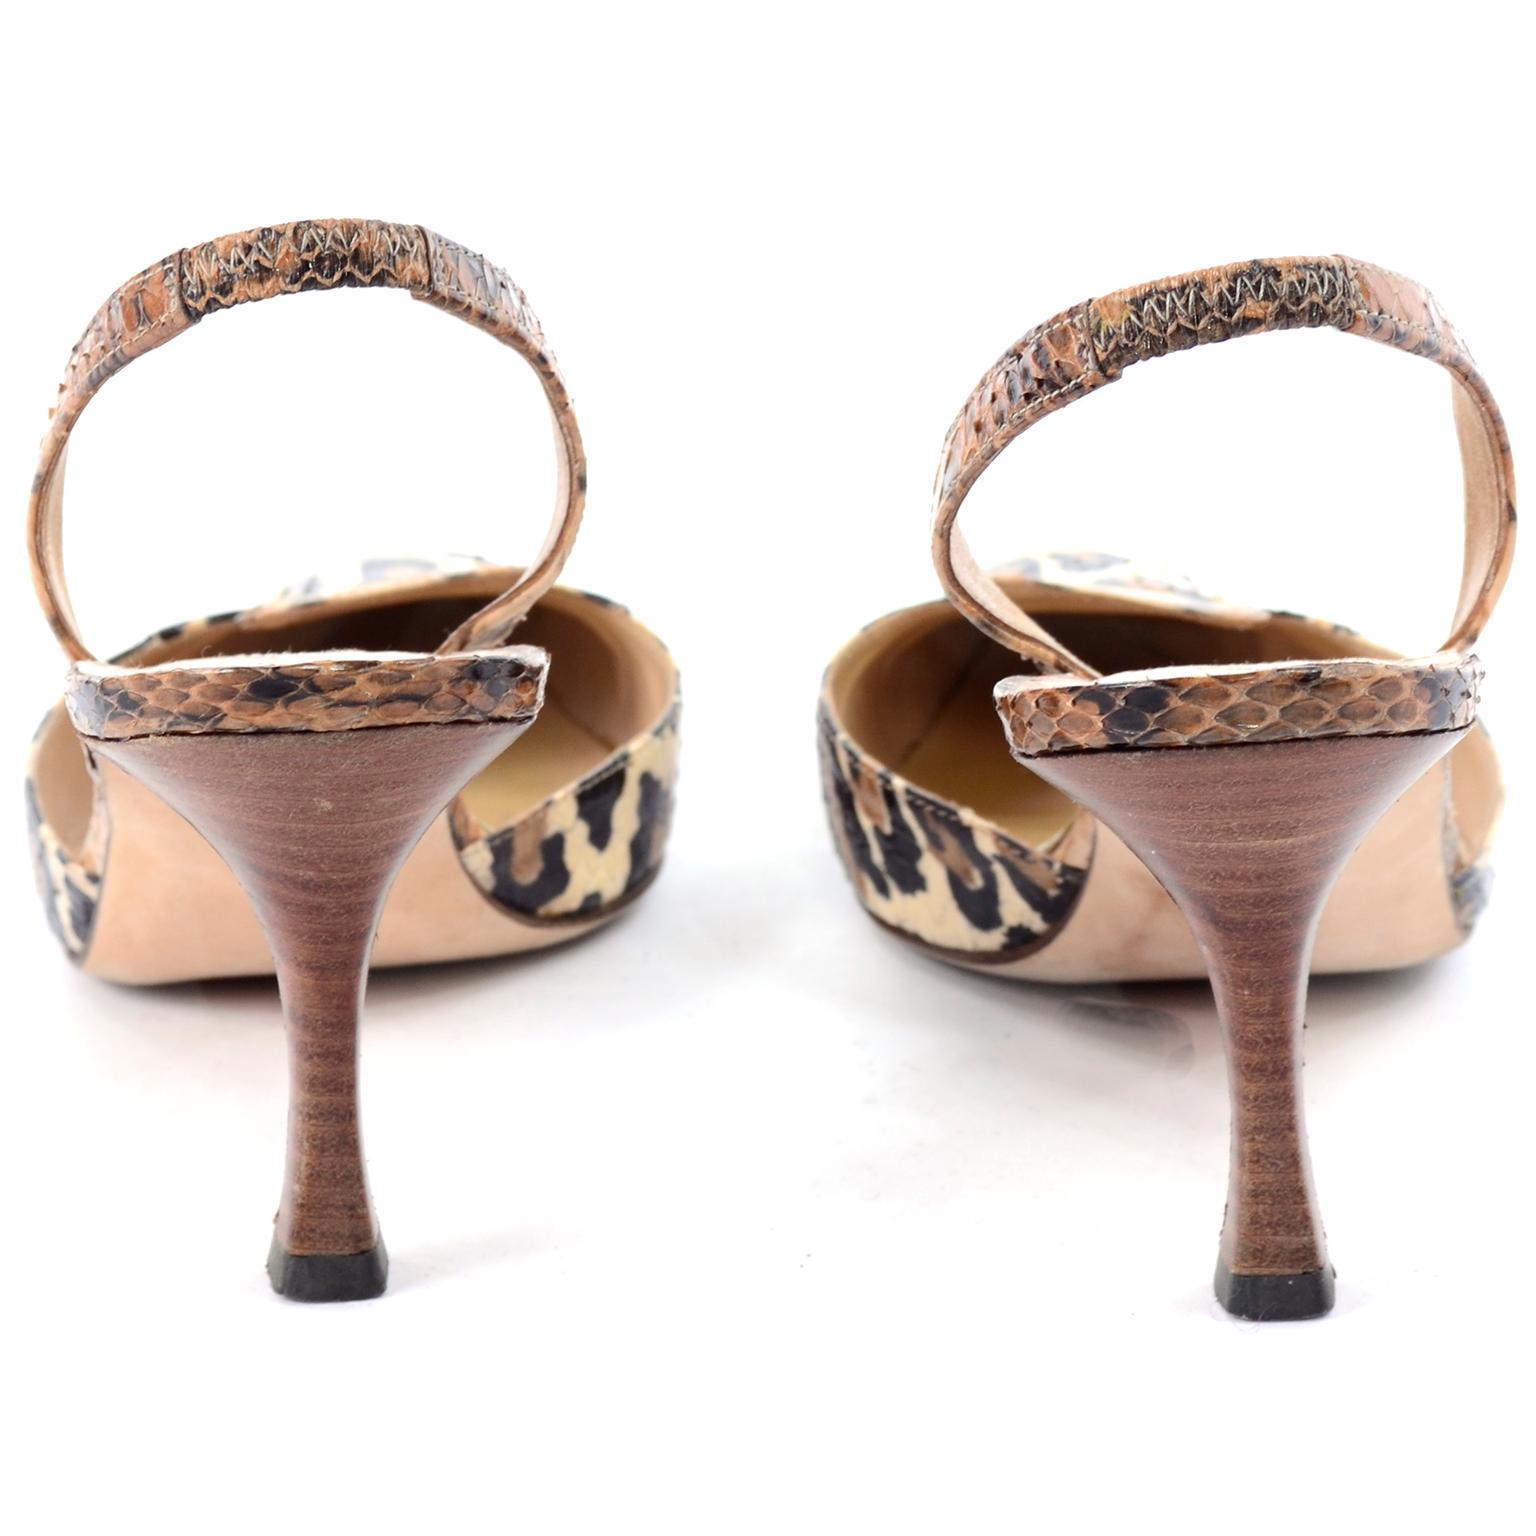 Manolo Blahnik Shoes in Size 37.5 Leopard Print Snakeskin Slingback Heels In Good Condition In Portland, OR